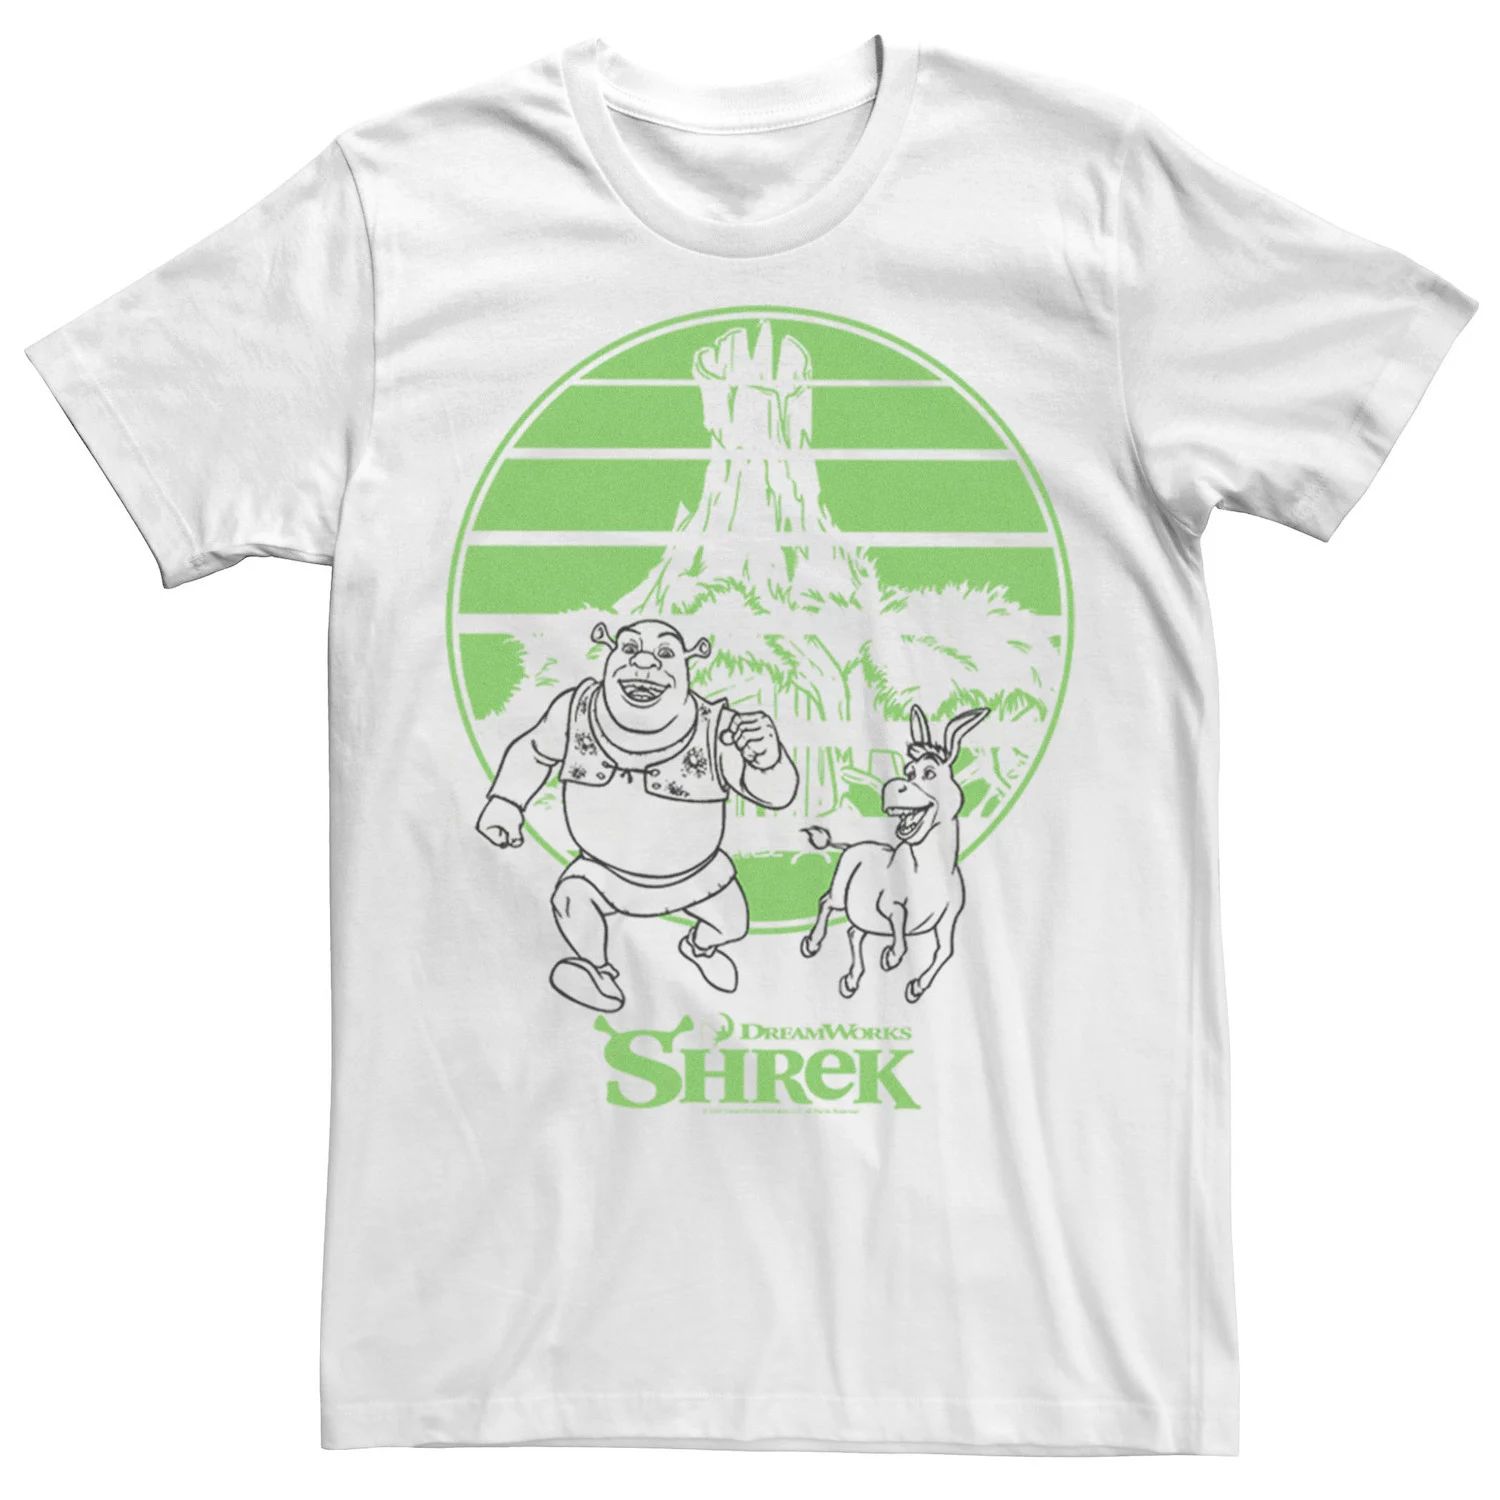 Мужская футболка в стиле ретро «Шрек и осел» с болотным контуром Licensed Character